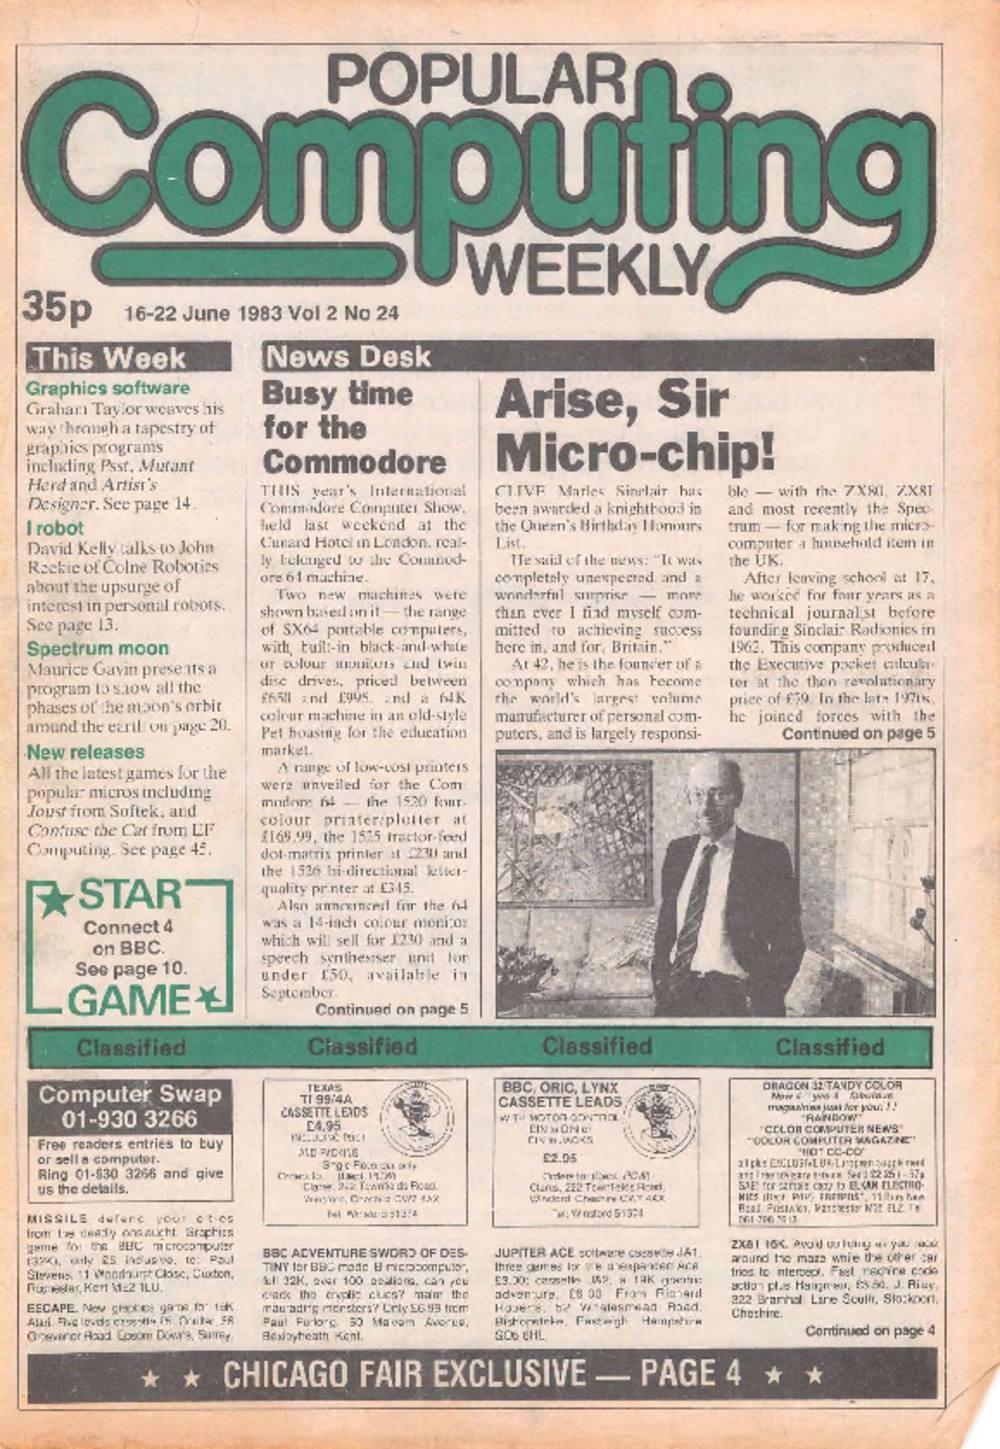 Article: Popular Computing Weekly Vol 2 No 24 - 16-22 June 1983